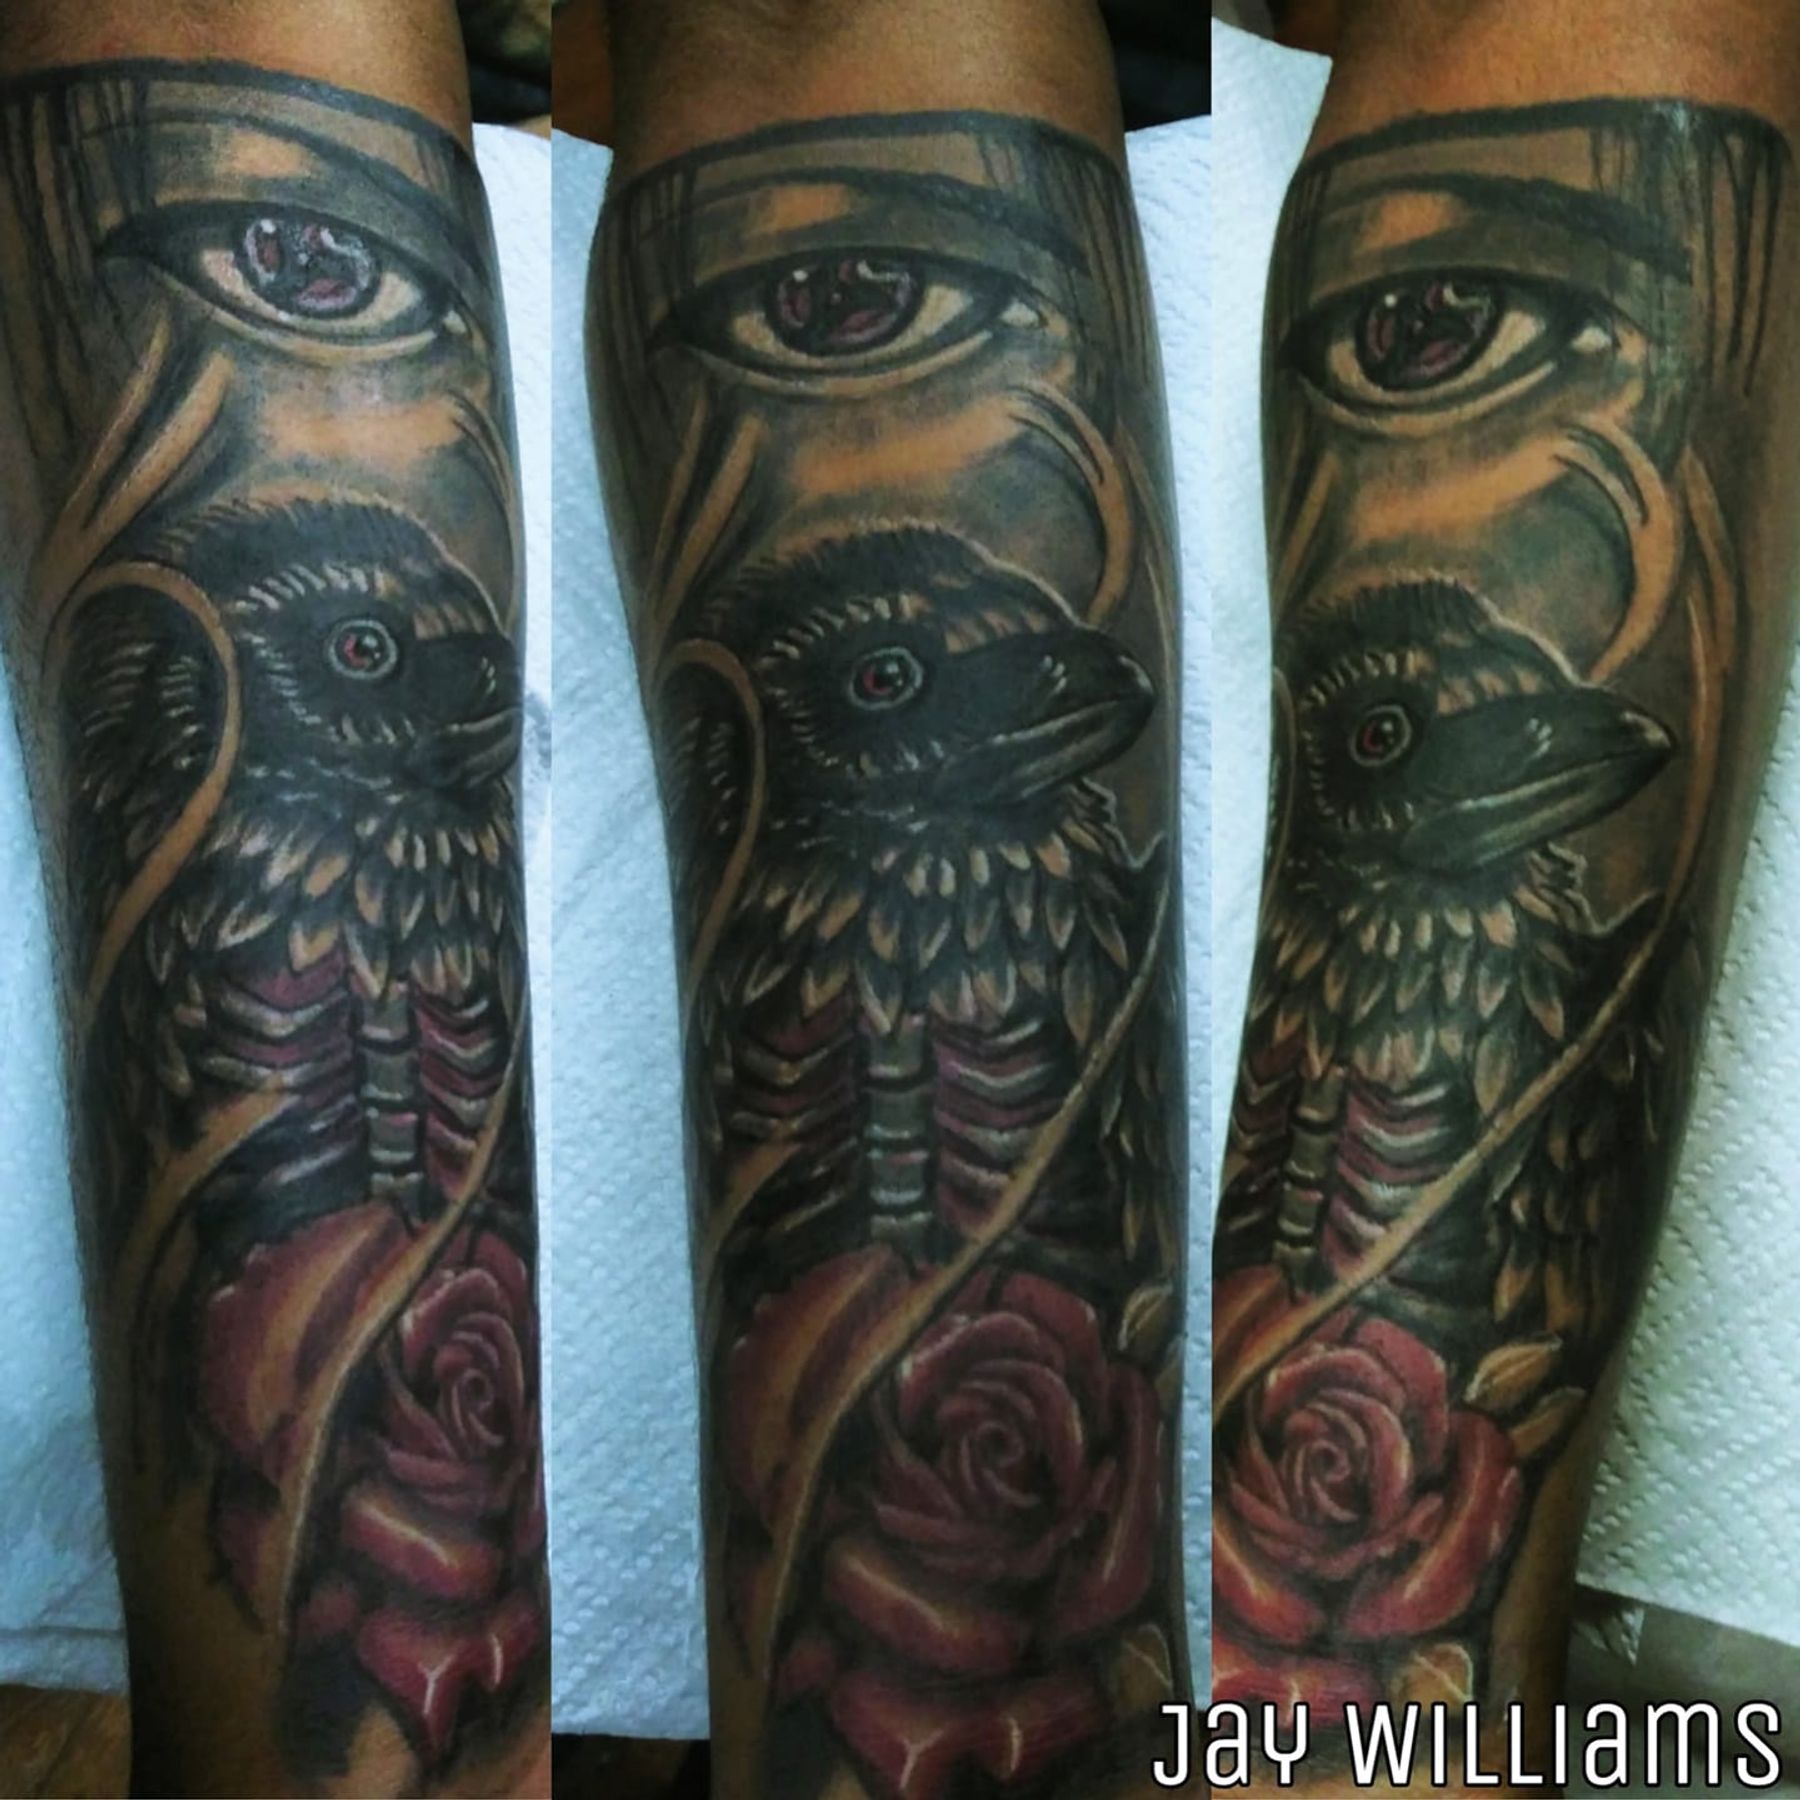 11-Sleeve-Tattoo by tbompsondanny10 on DeviantArt